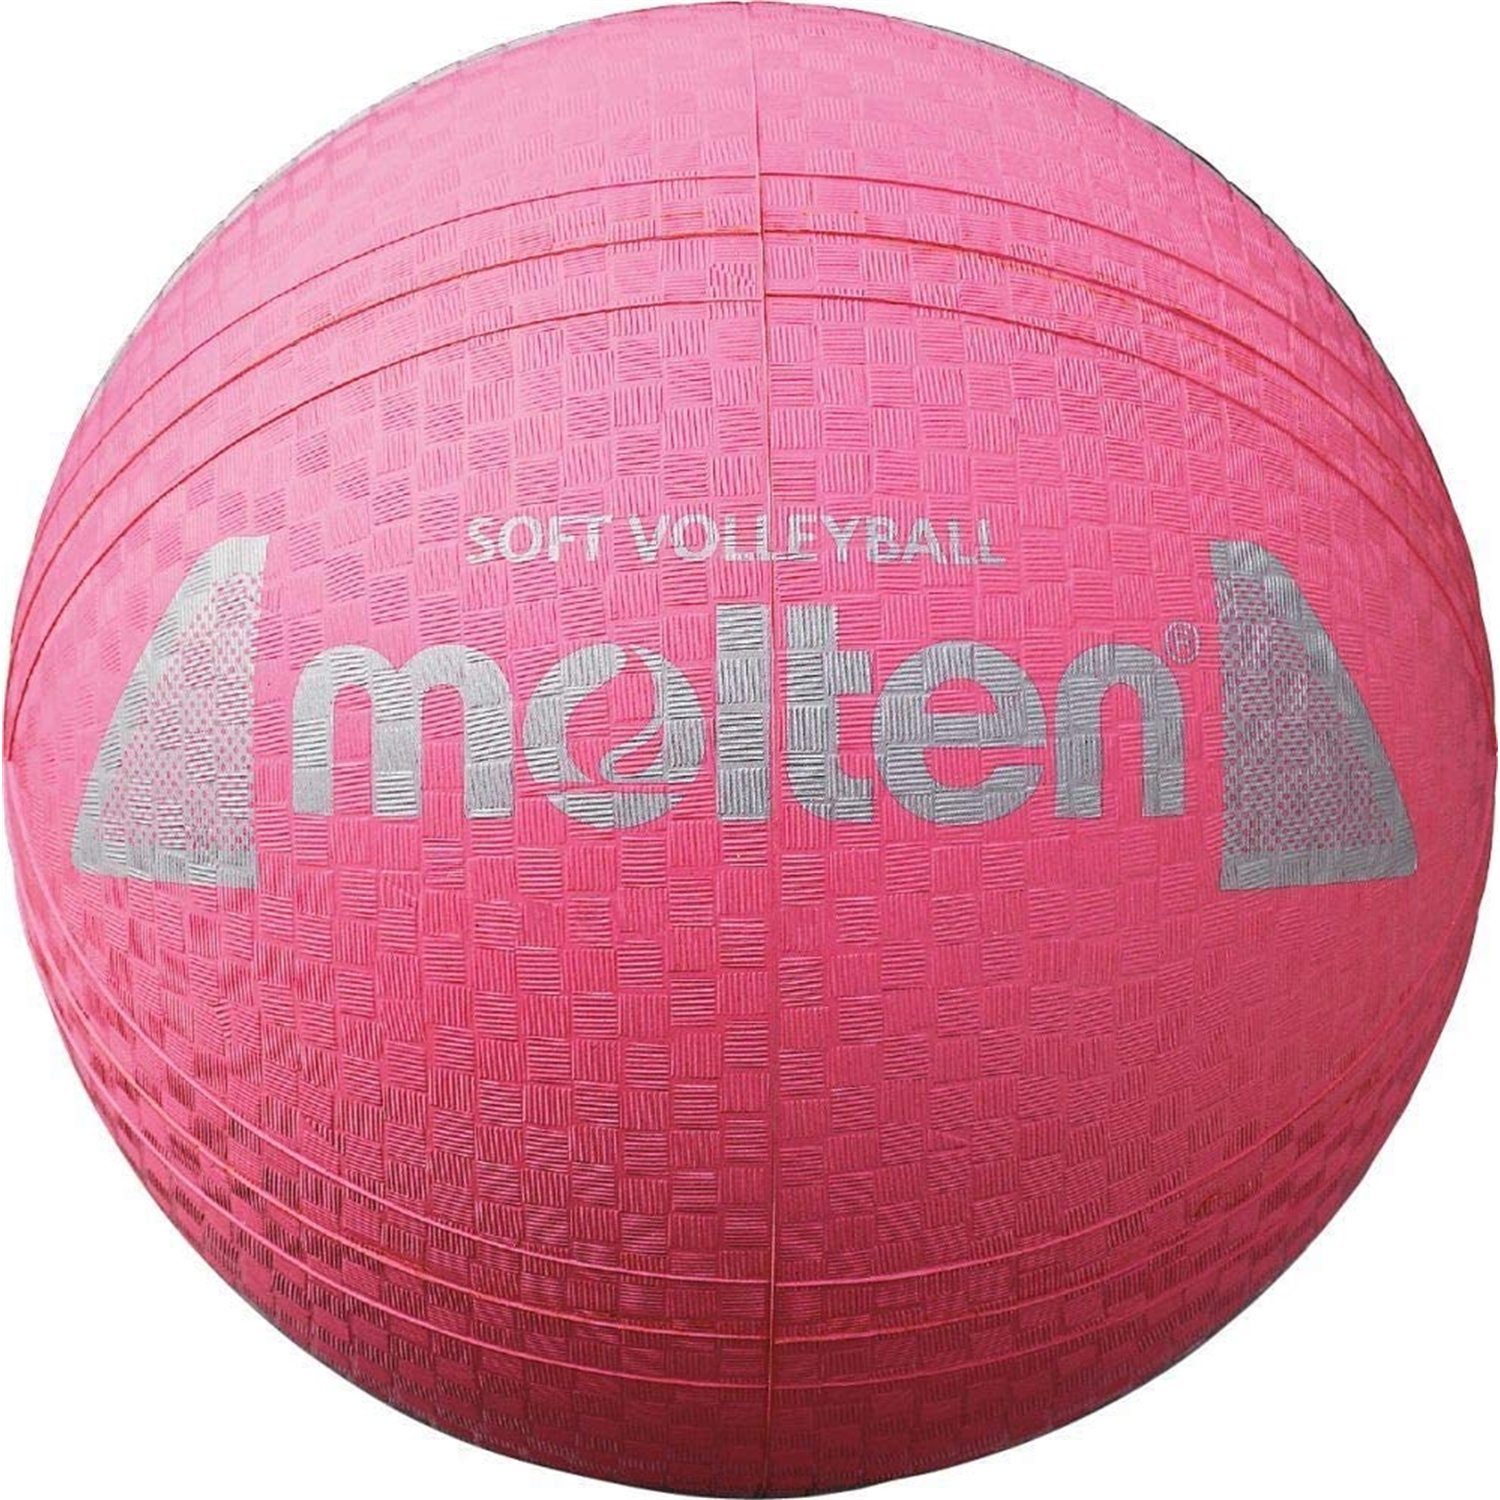 Molten Softball S2Y1250-P Gummi Basketballkorb